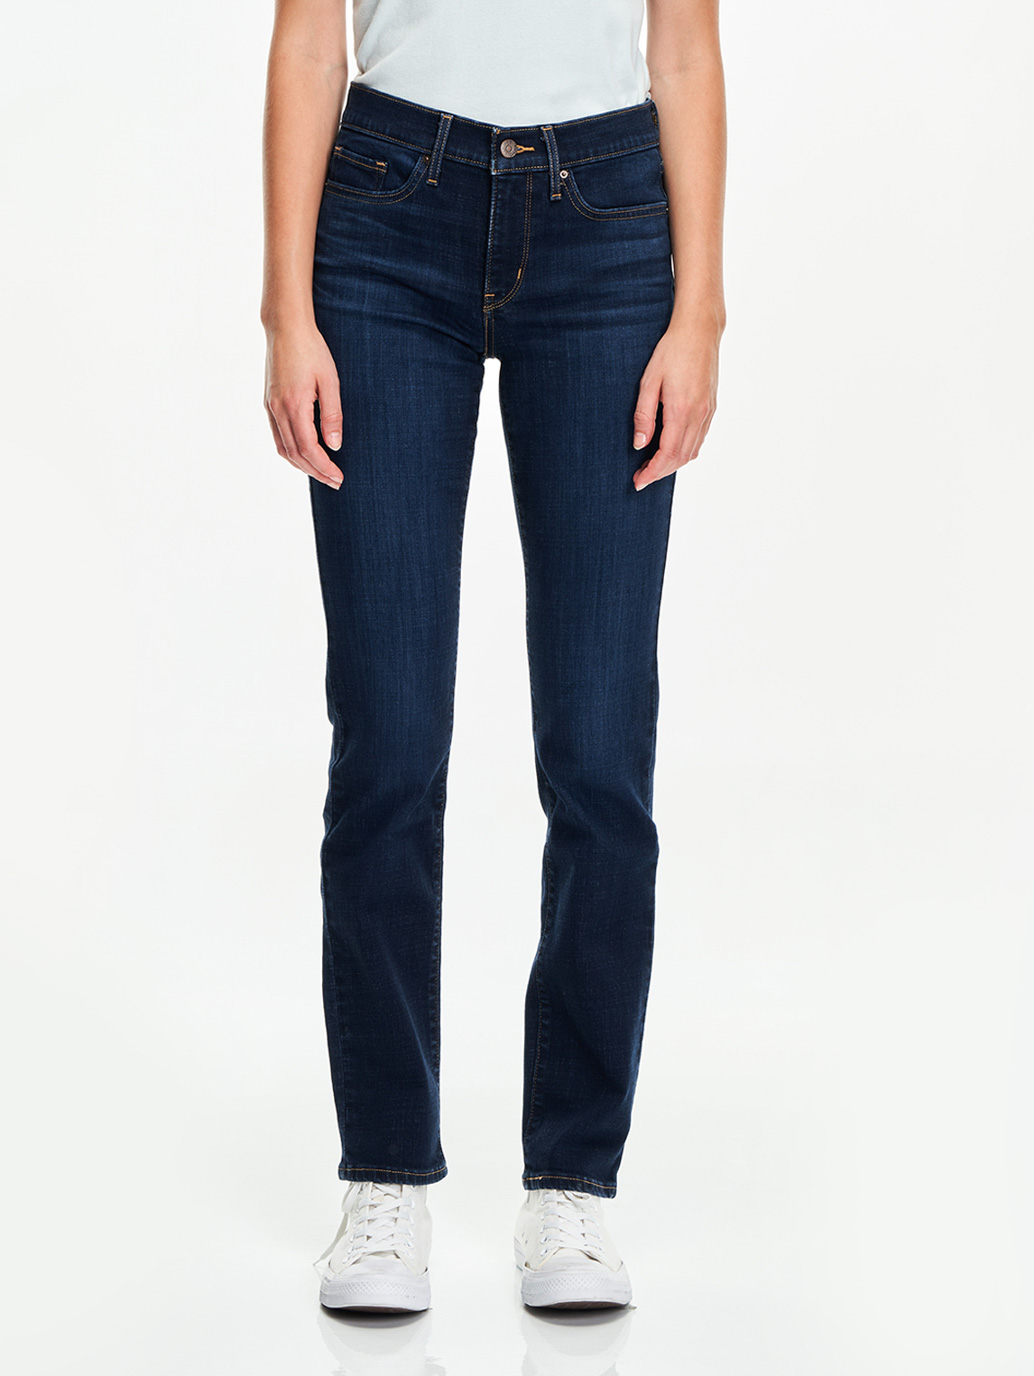 Women's Dark Blue Shaping Slim Jeans - Stretch Denim